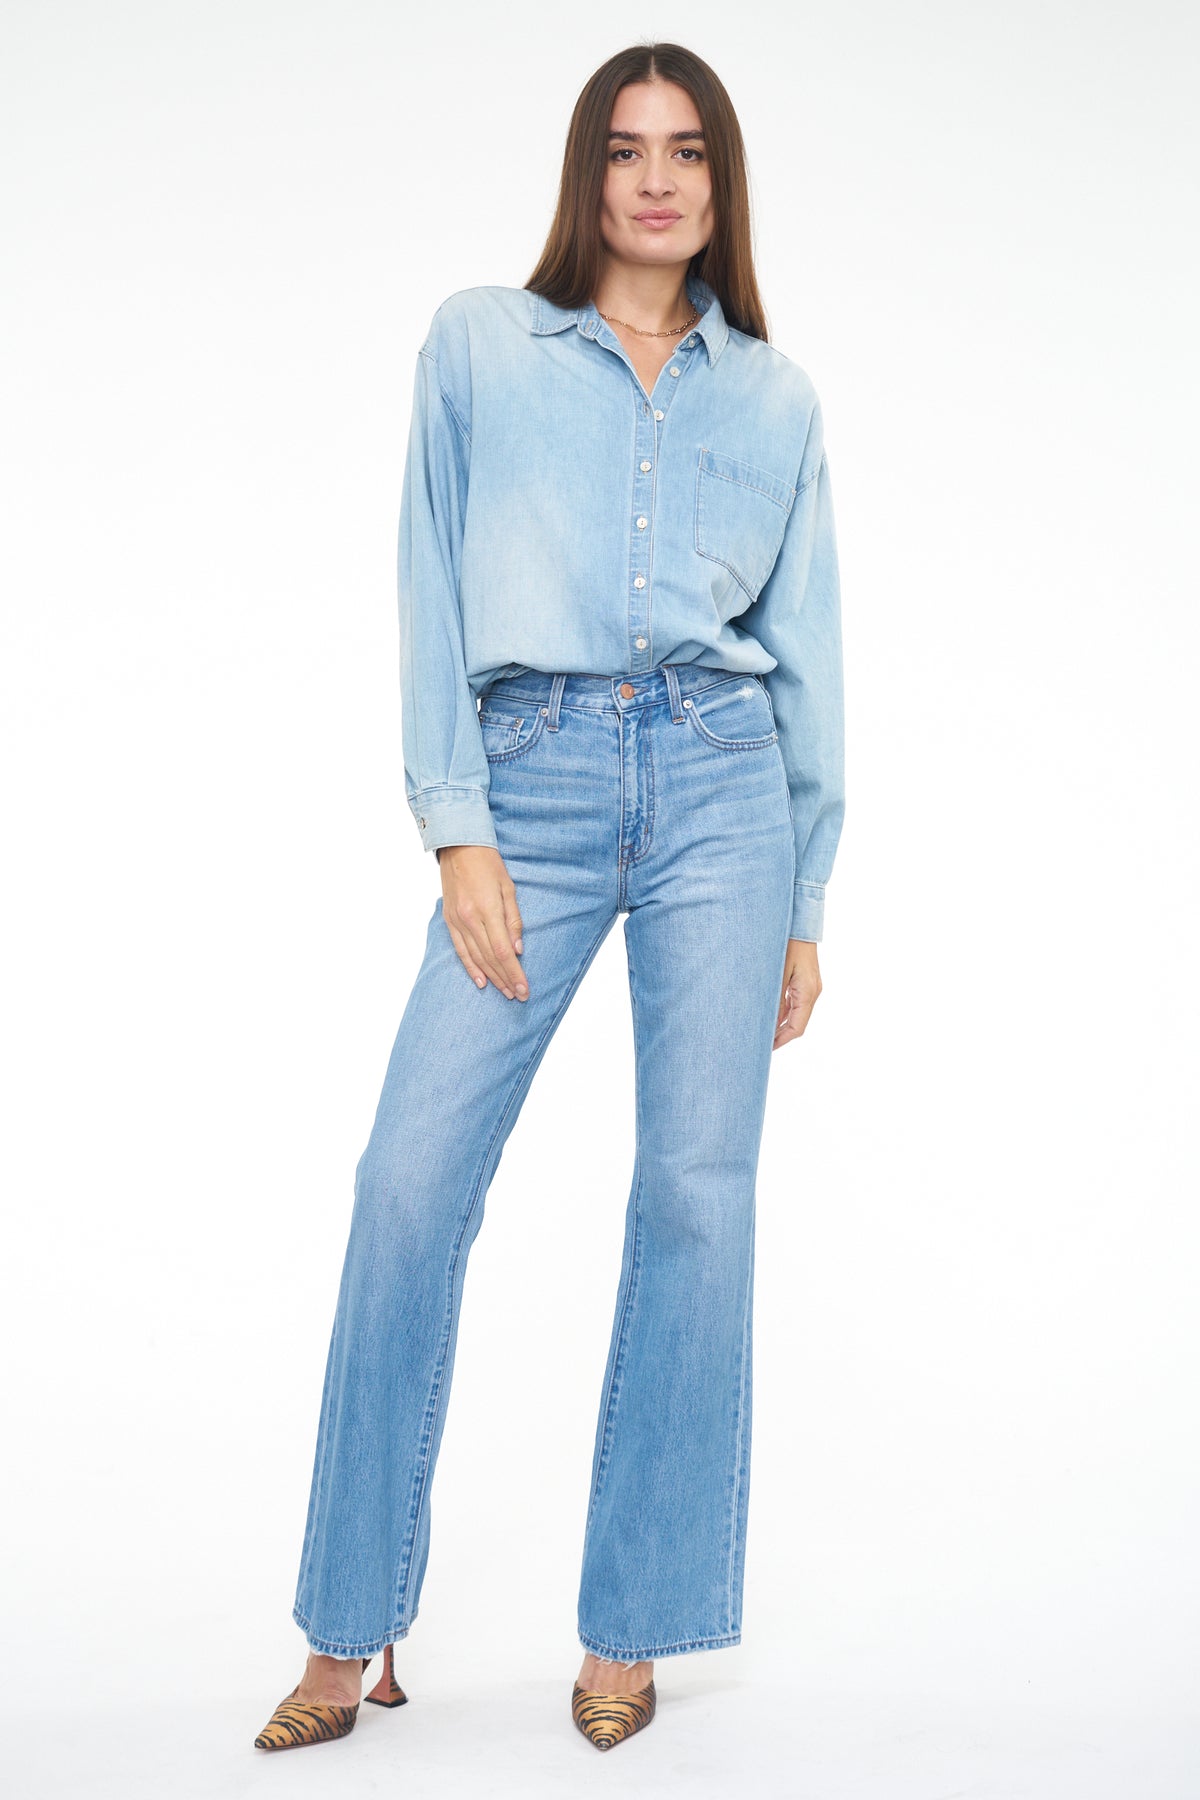 Sloane Long Sleeve Oversized Button Down Shirt - Edgewater
            
              Sale